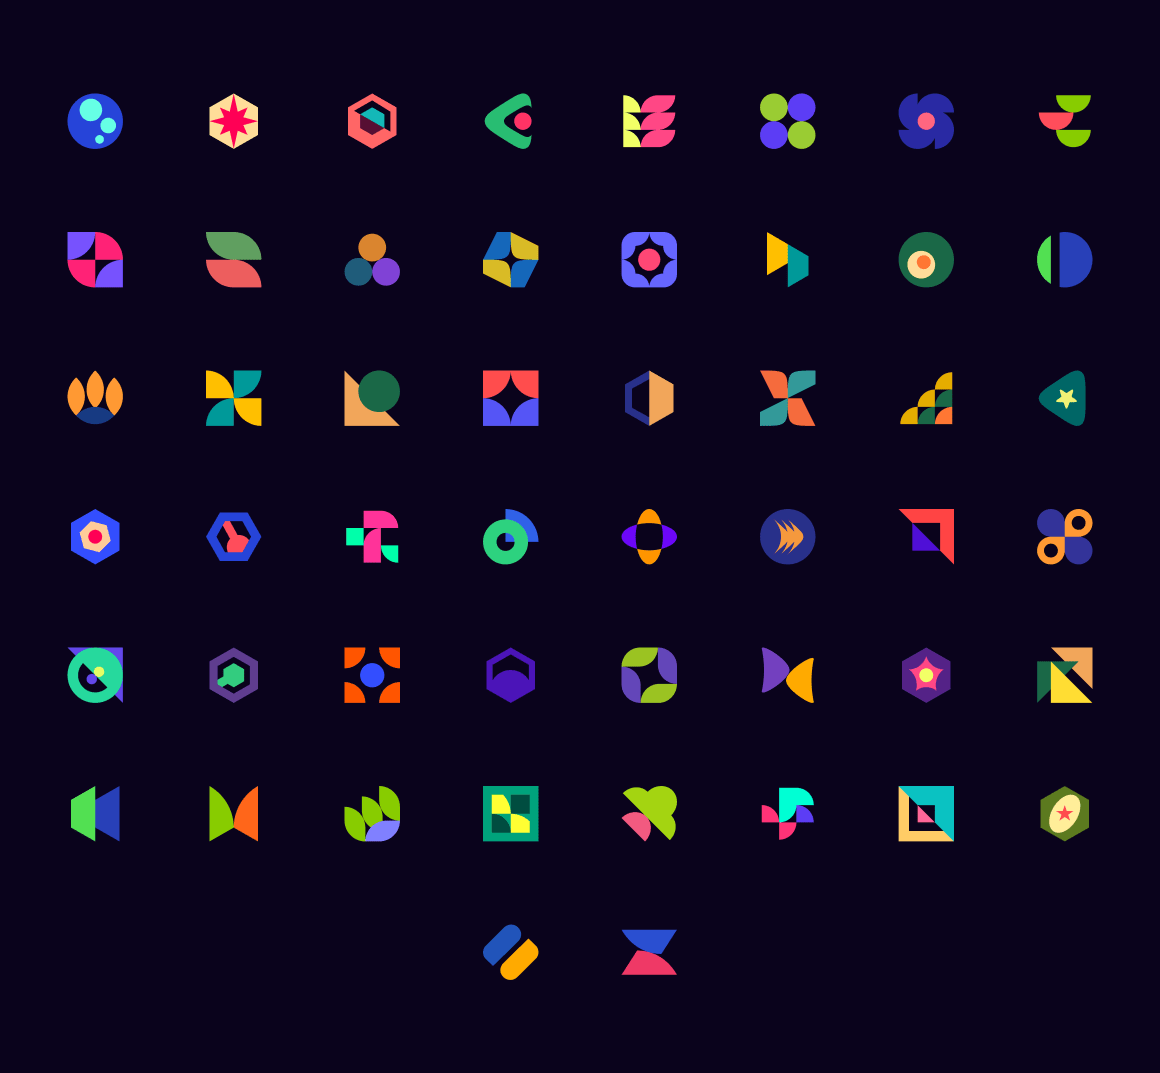 50 Free Geometric Shapes for Icons and Logo Design - Freebiesbug